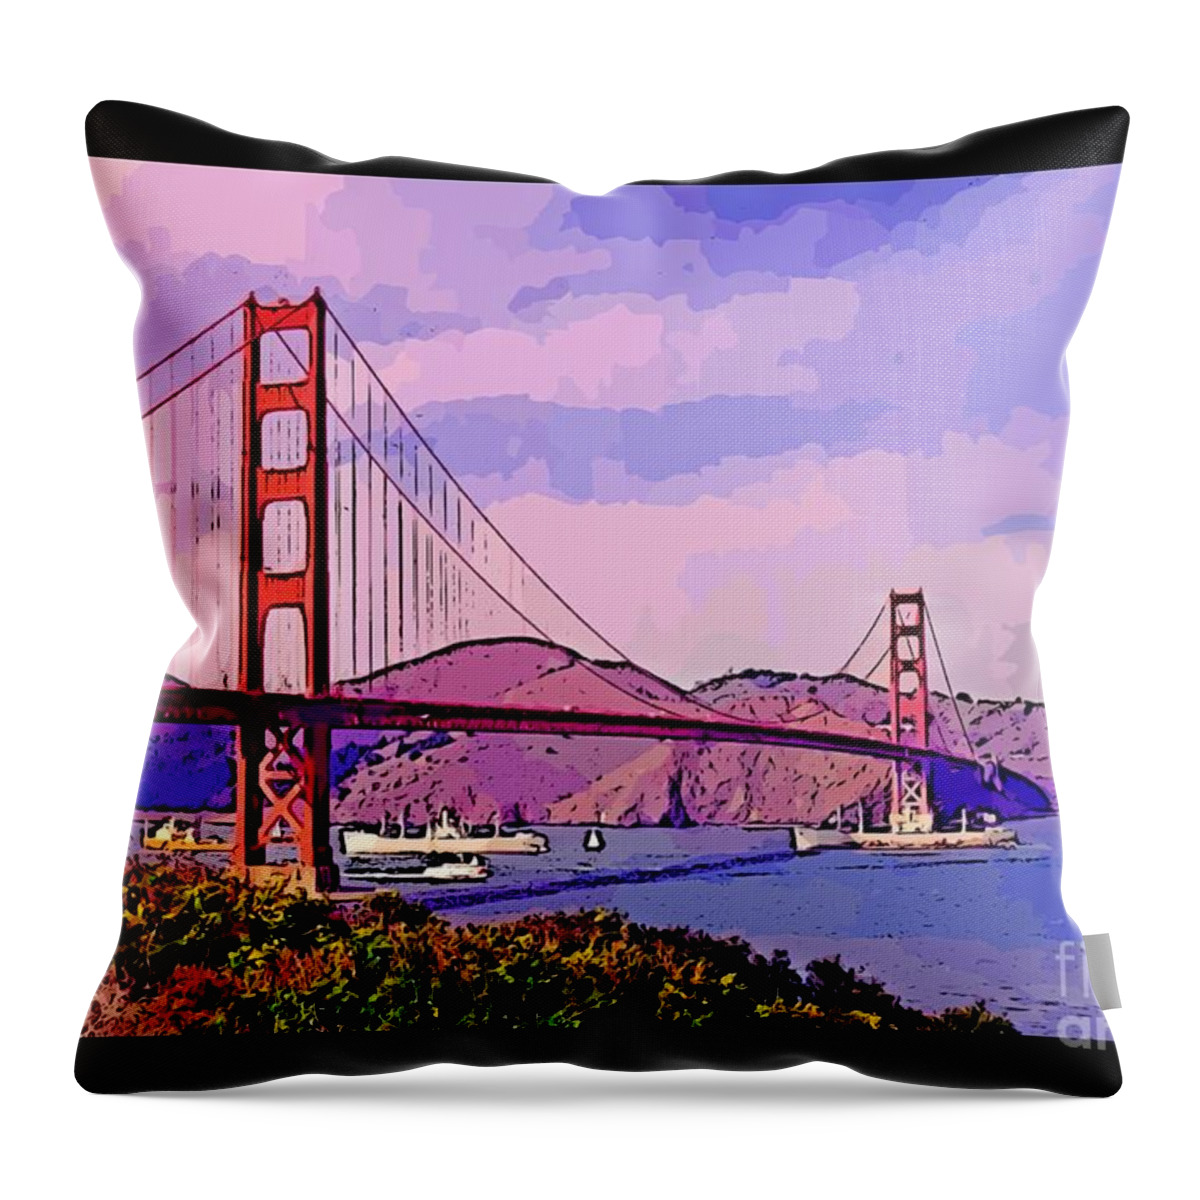 Golden Gate Bridge Throw Pillow featuring the photograph Golden Gate Bridge by John Malone